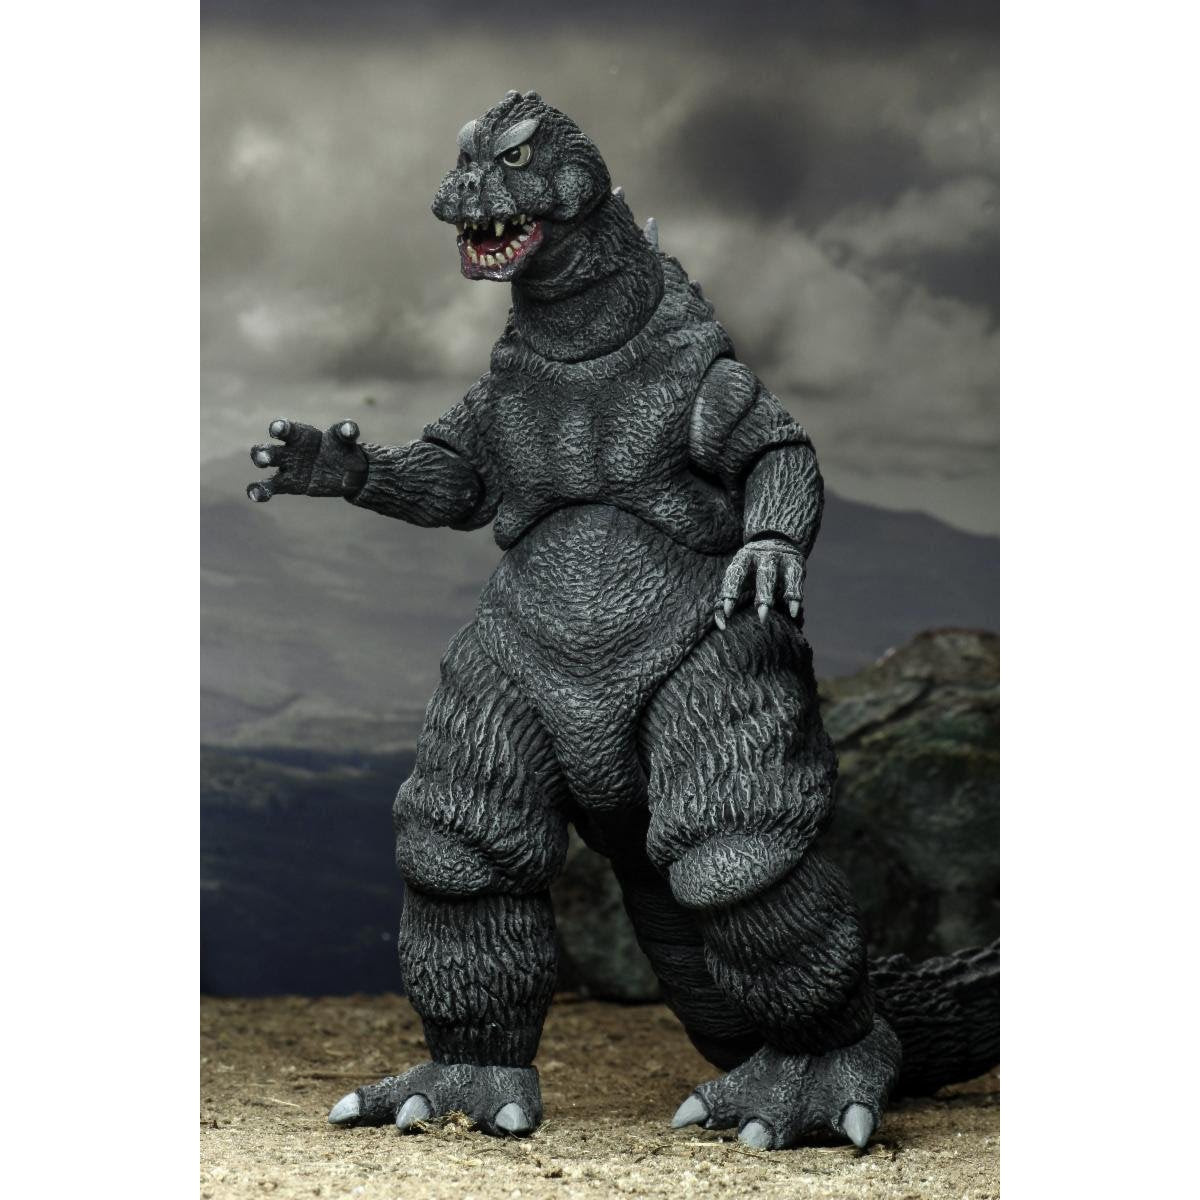 Image of Godzilla - 12" Head to Tail Action Figure - 1964 Godzilla (Mothra vs Godzilla)